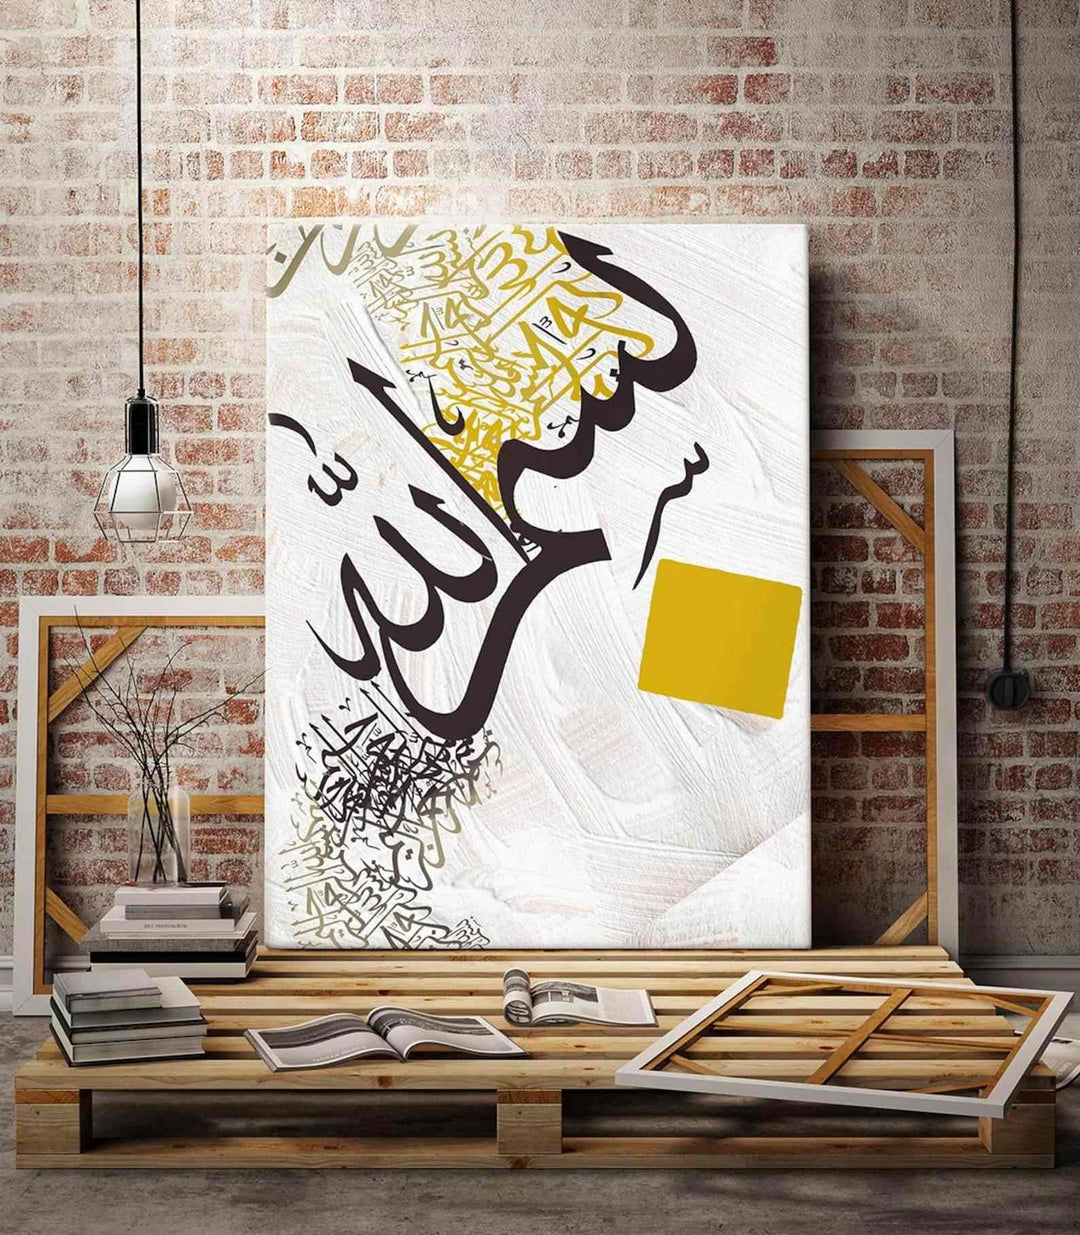 Basmala Modern Calligraphy Oil Paint Reproduction Canvas Print Islamic Wall Art - Islamic Wall Art Store